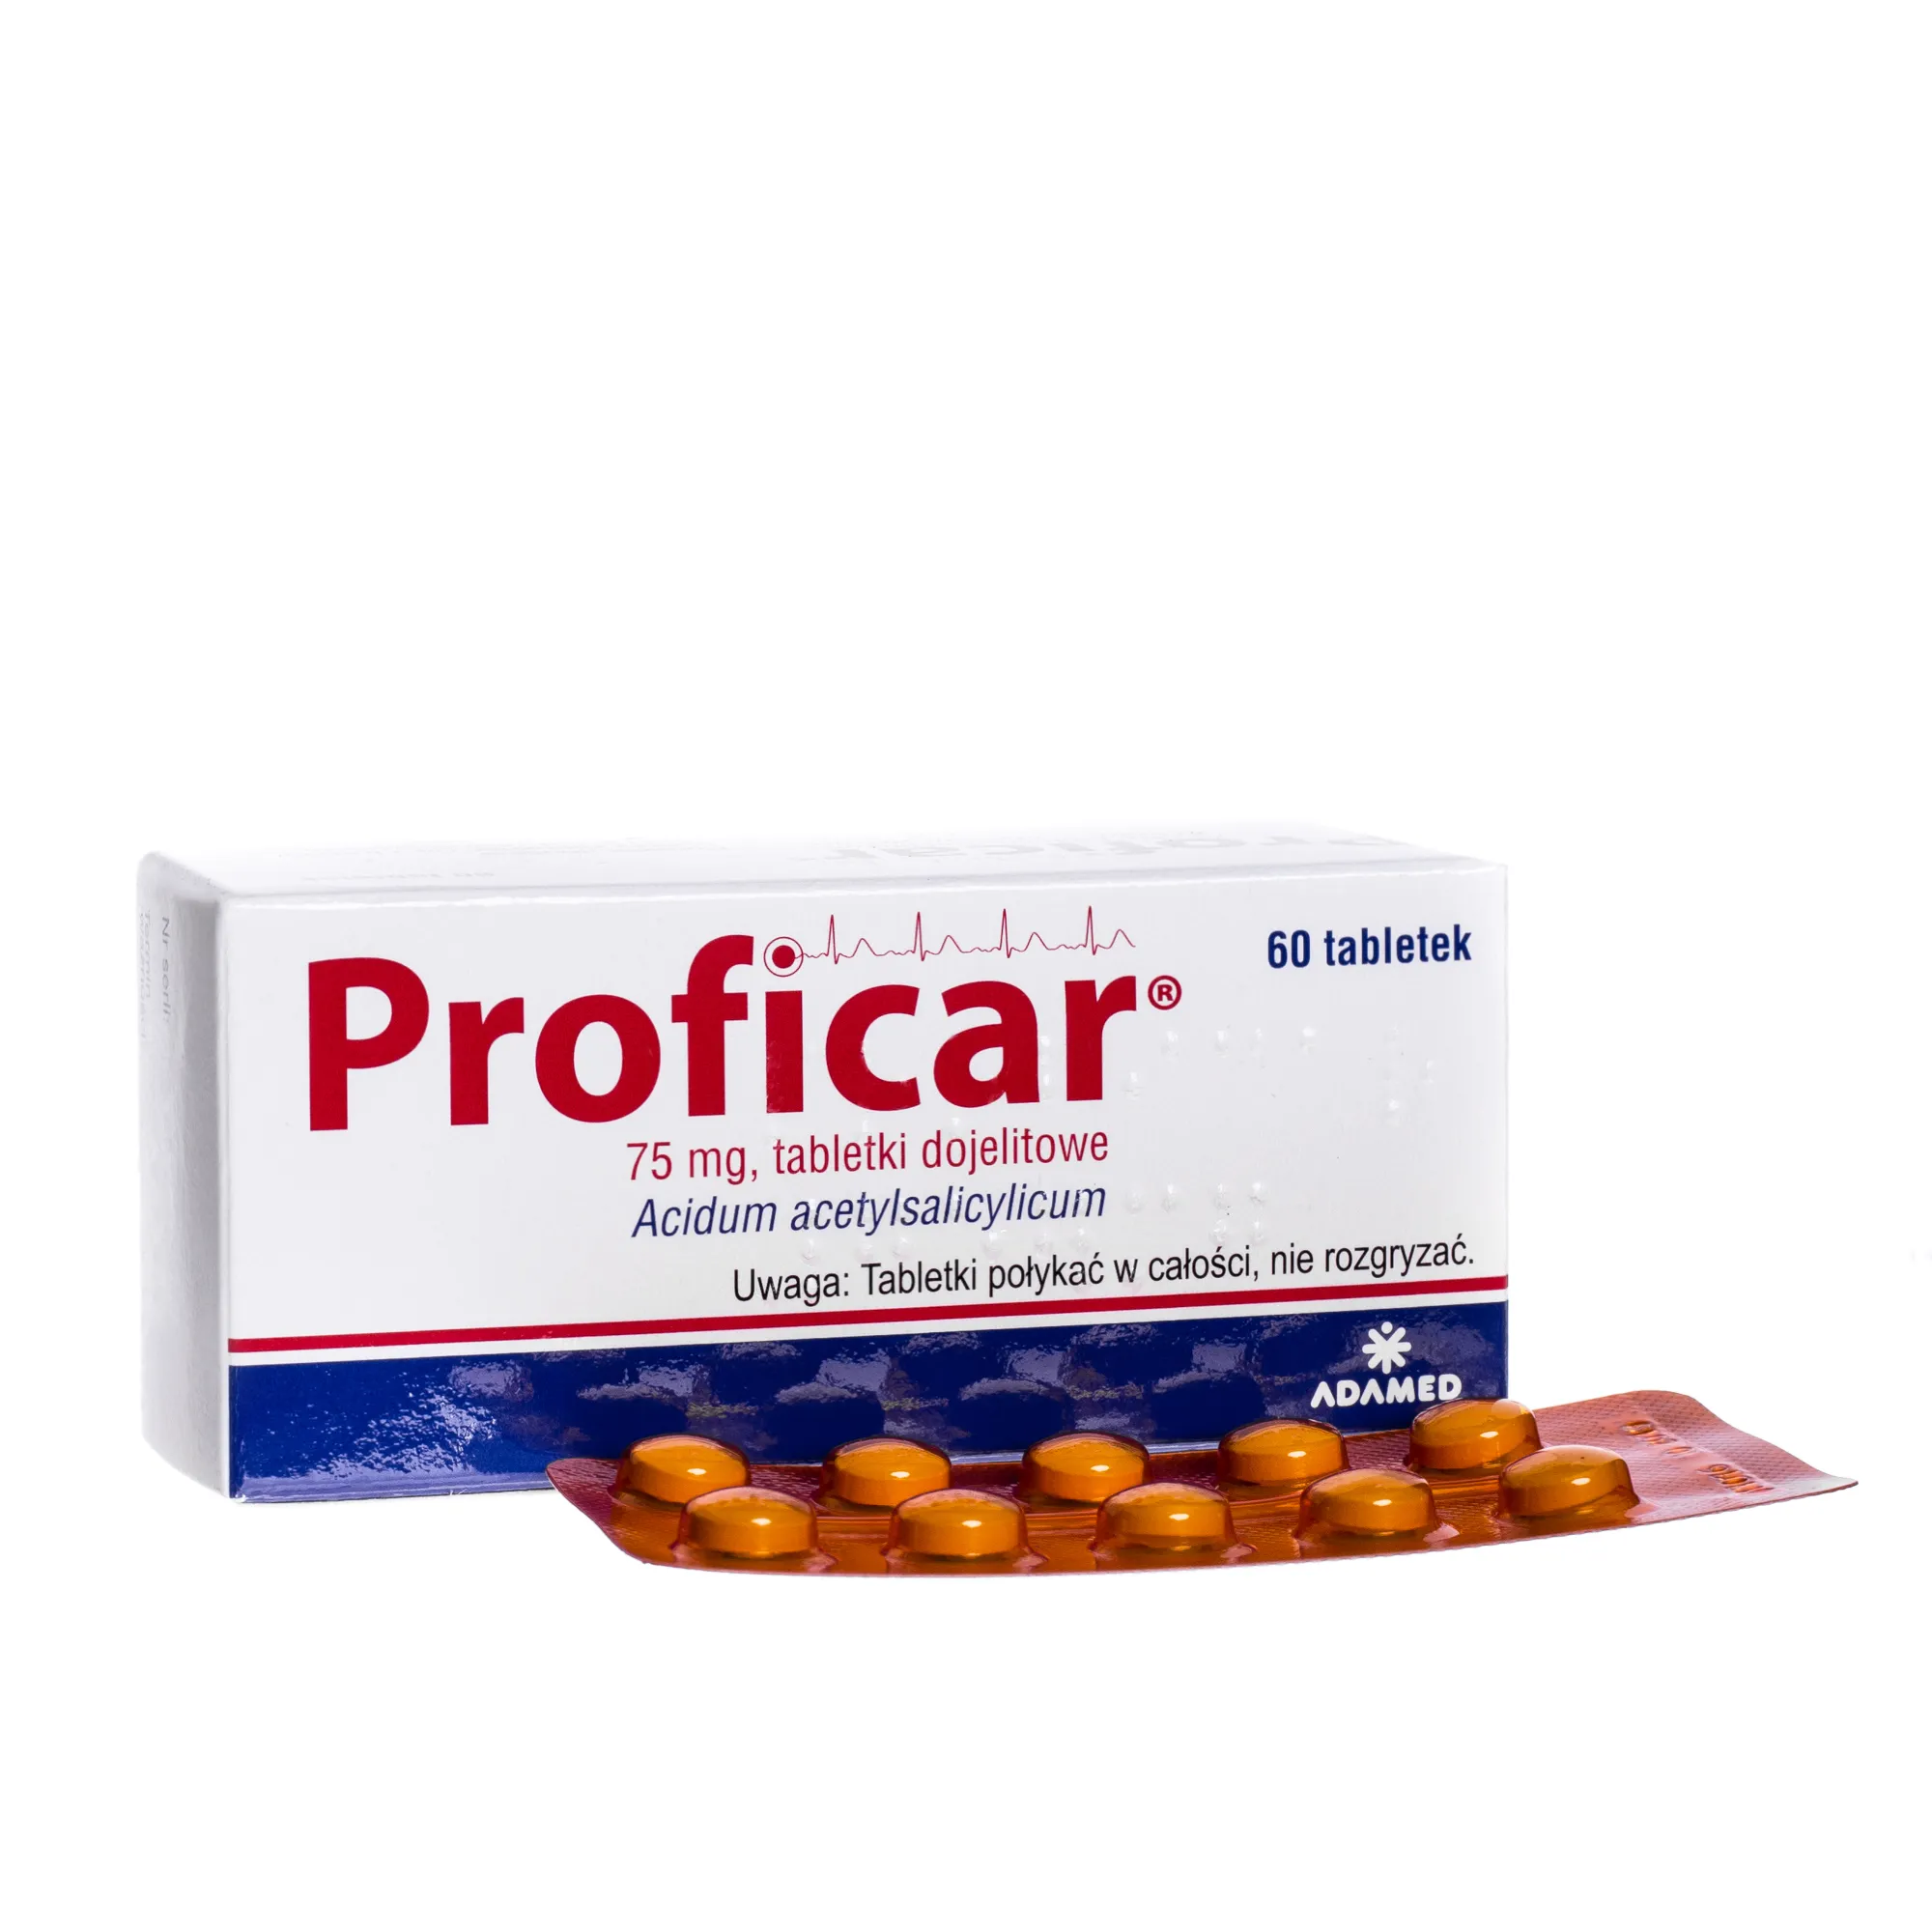 Proficar, 75 mg, 60 tabletek